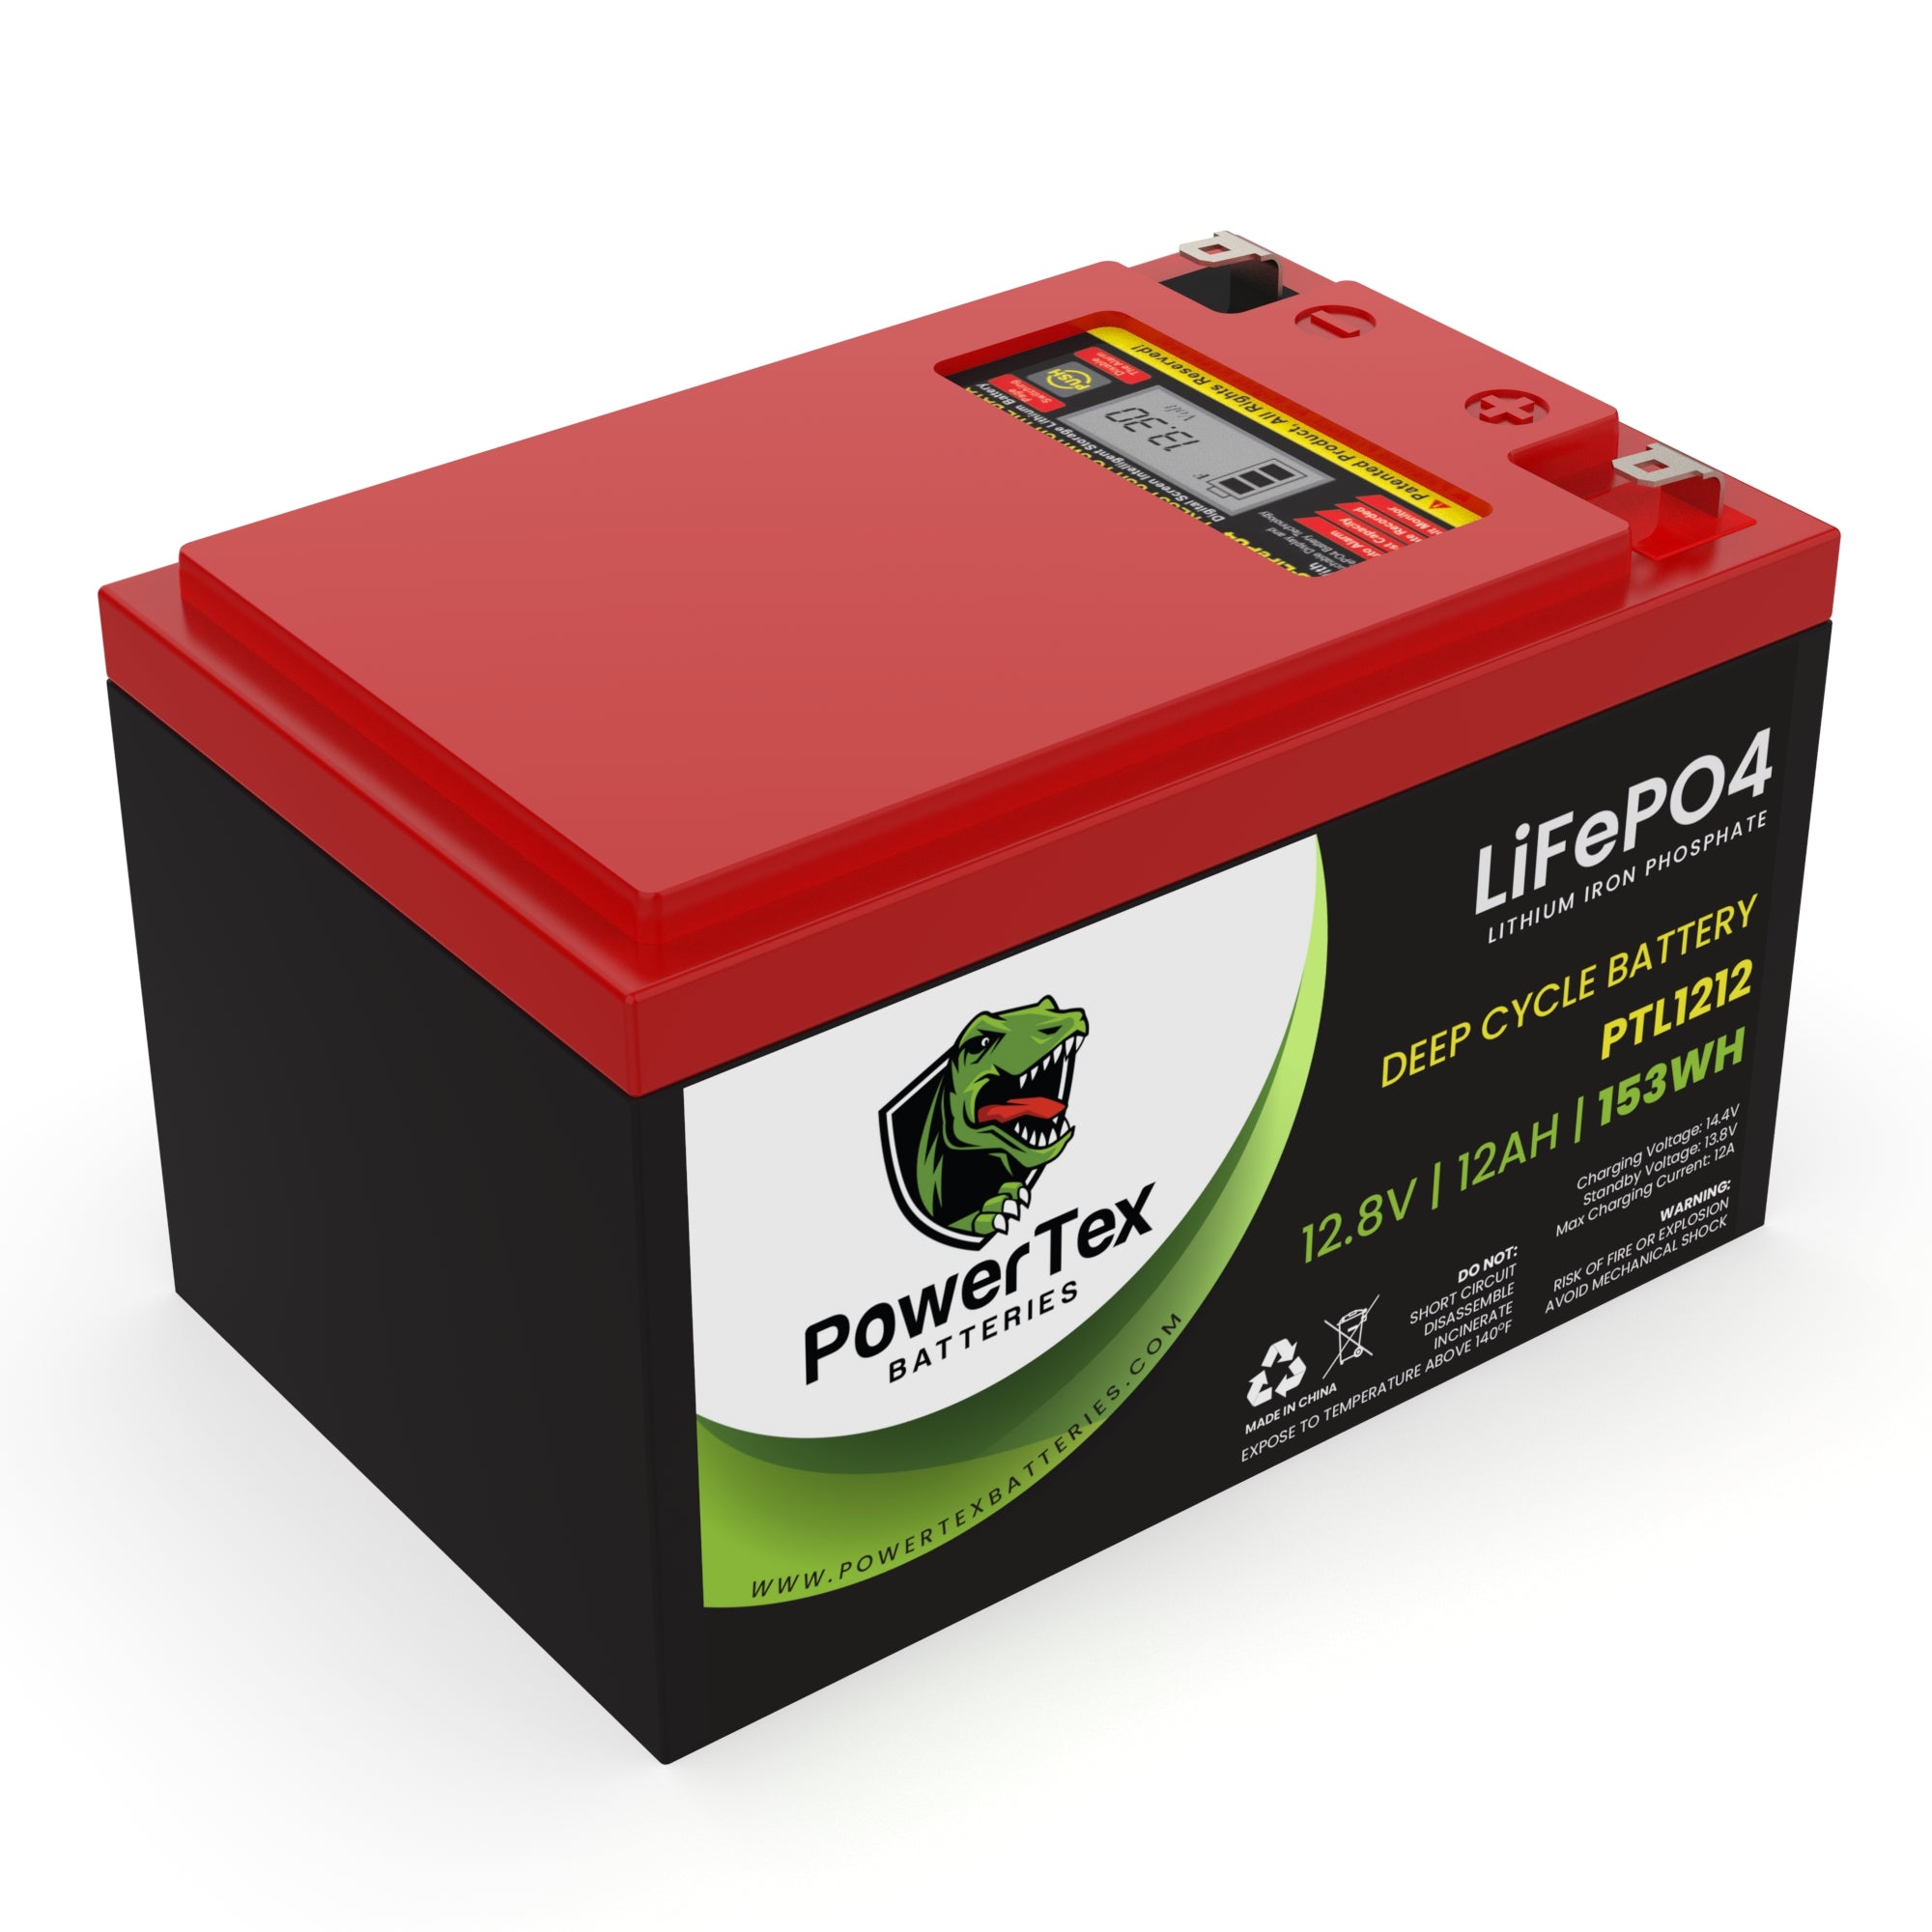 PowerTex Batteries 12V 12Ah LiFePO4 Lithium Iron Phosphate Battery